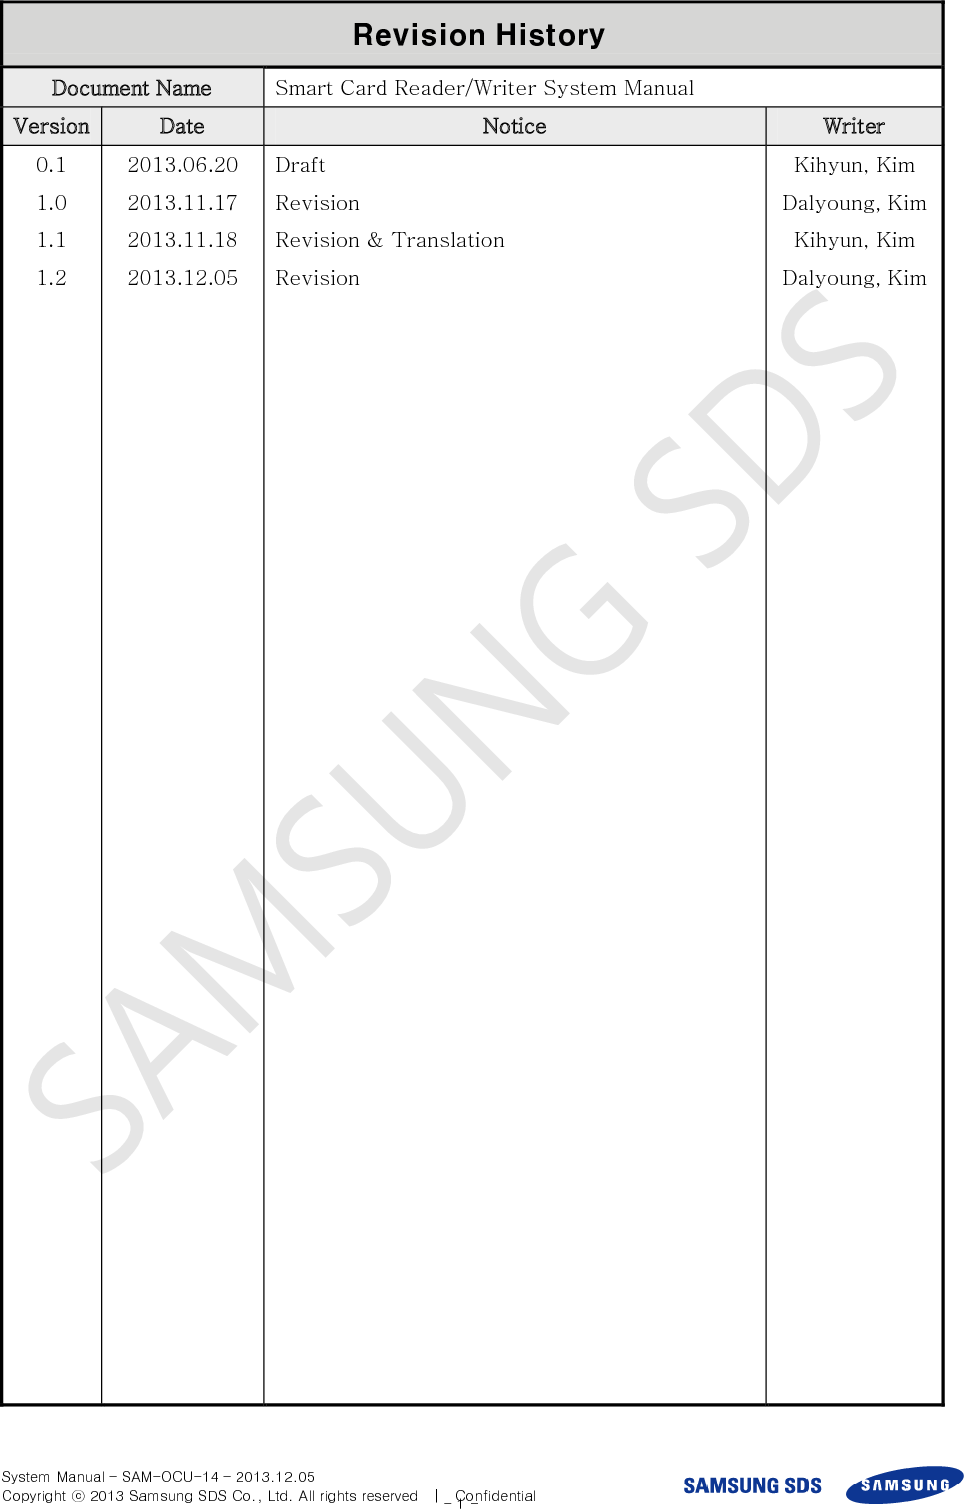  System Manual – SAM-OCU-14 – 2013.12.05 Copyright ⓒ 2013 Samsung SDS Co., Ltd. All rights reserved    |    Confidential - 2 -  